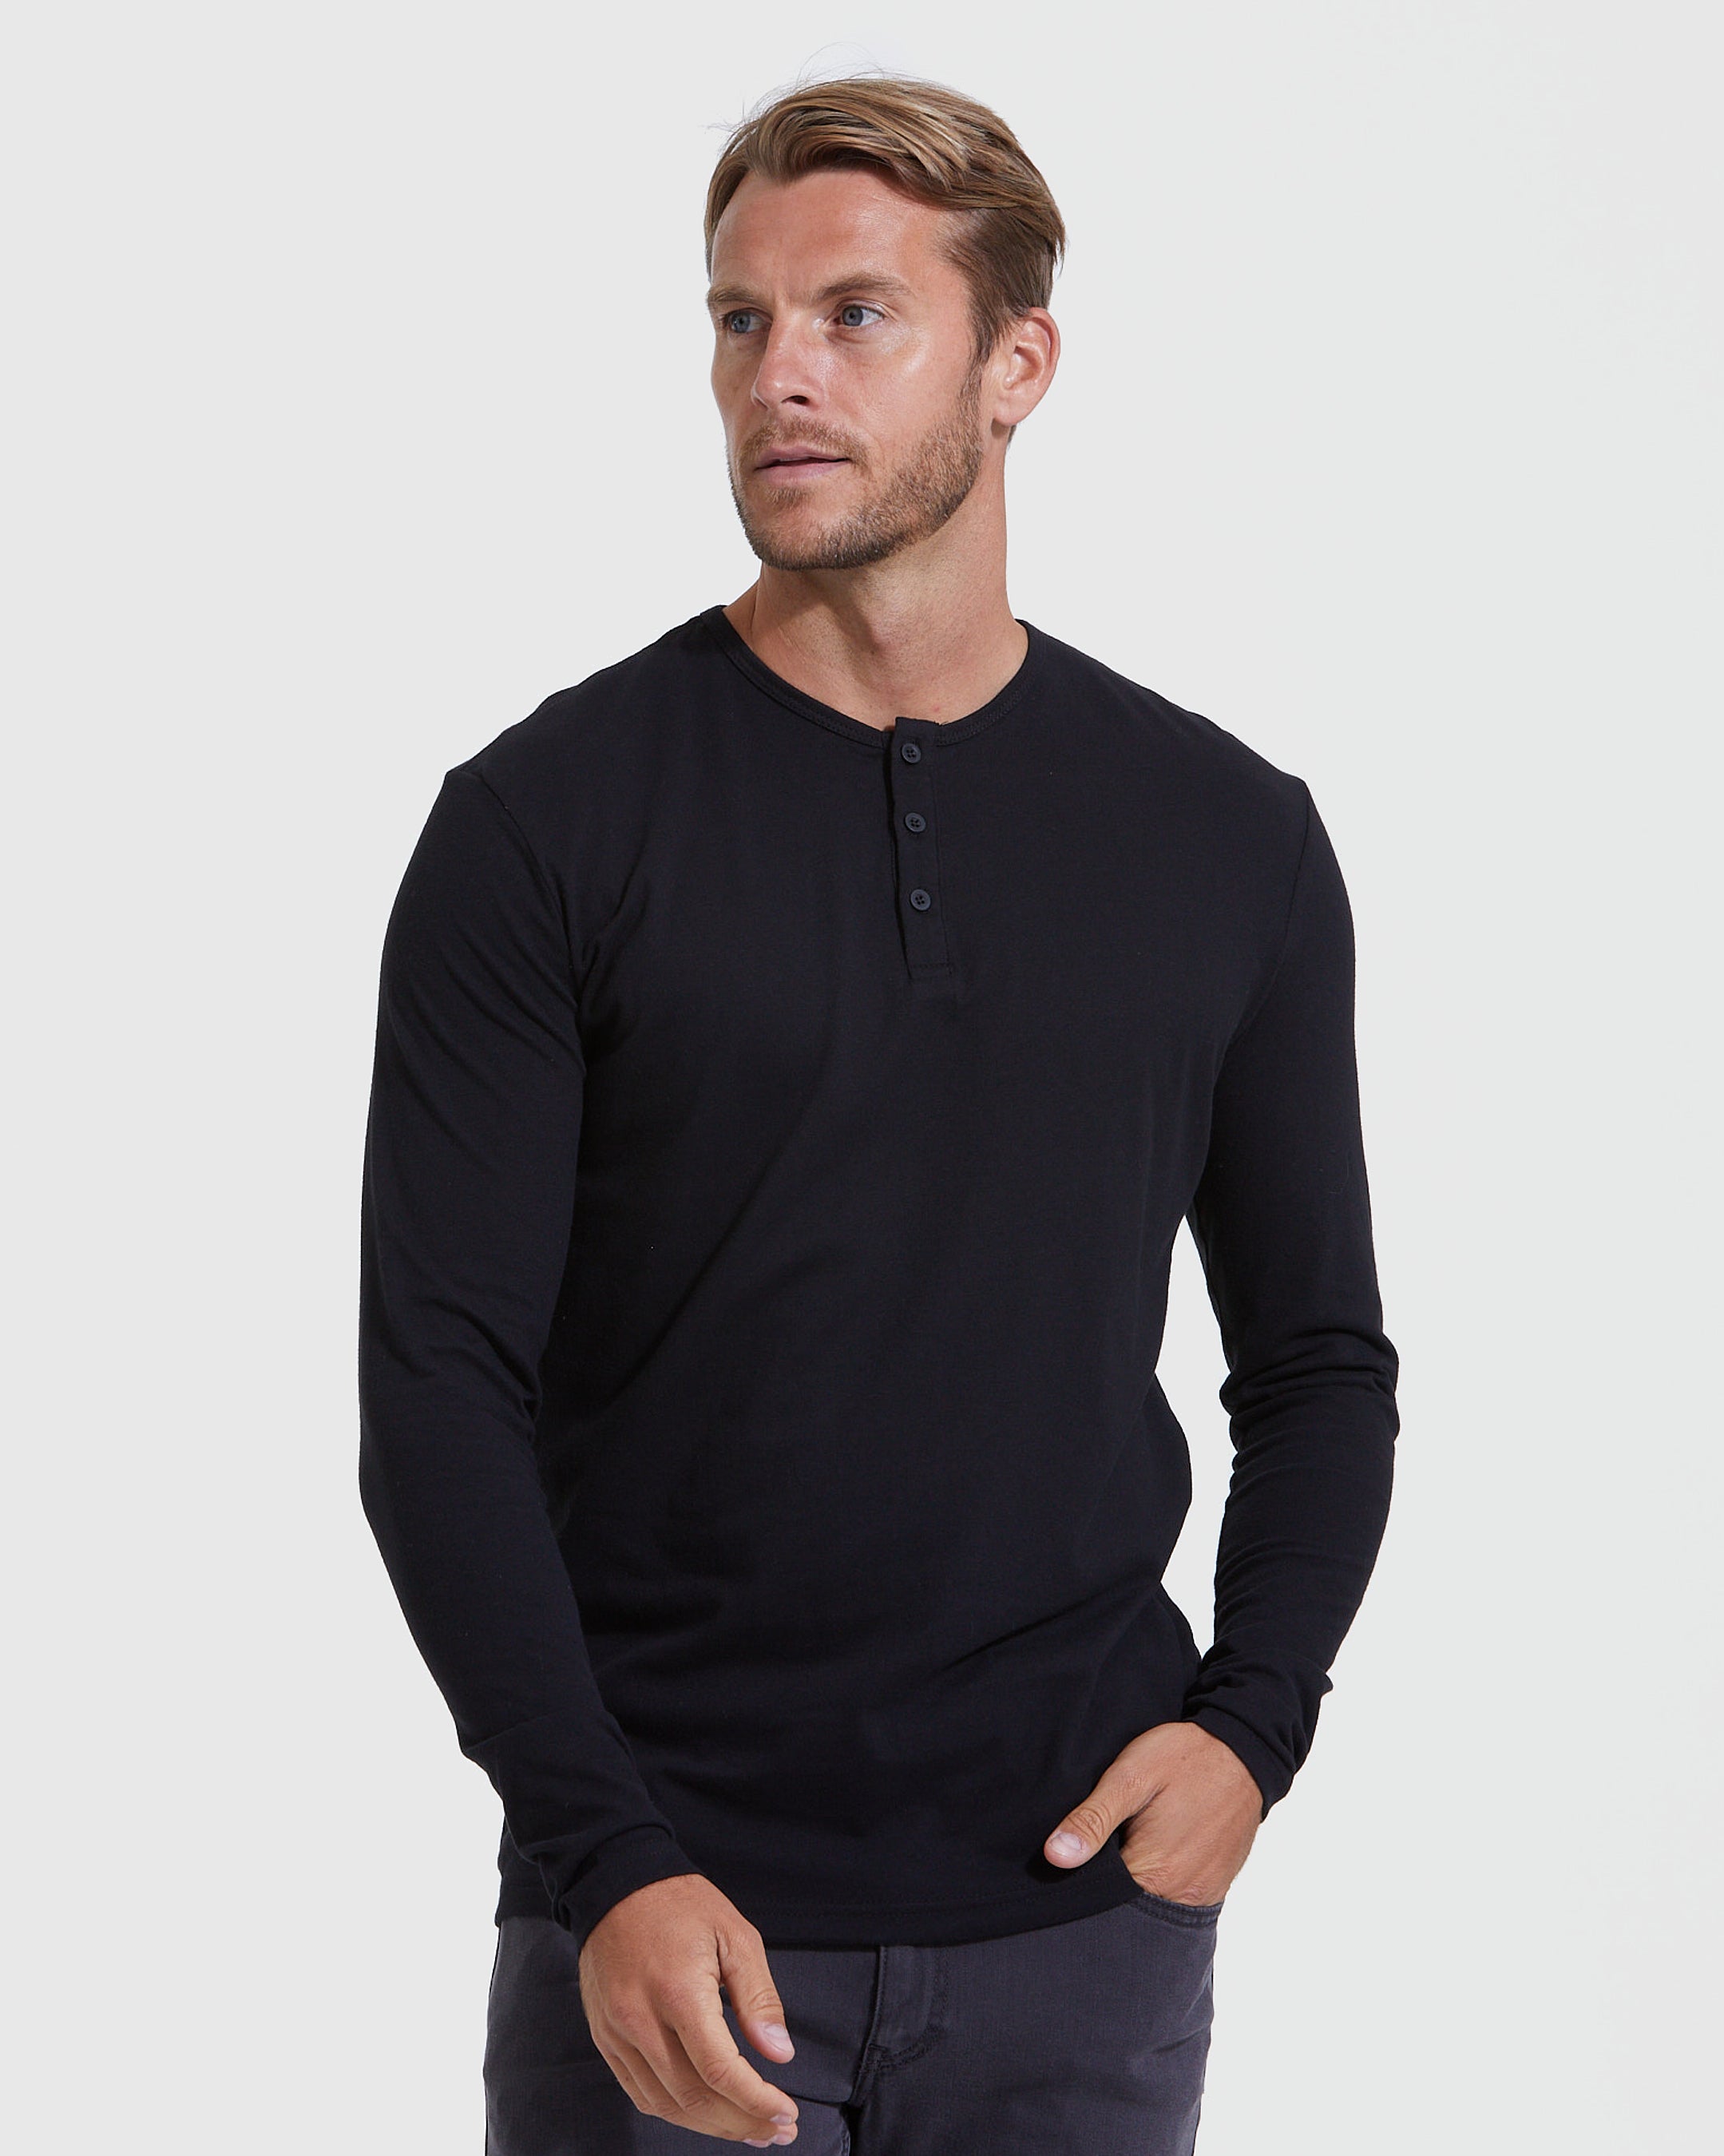  True Classic Long Sleeve Henley Shirt for Men. Premium